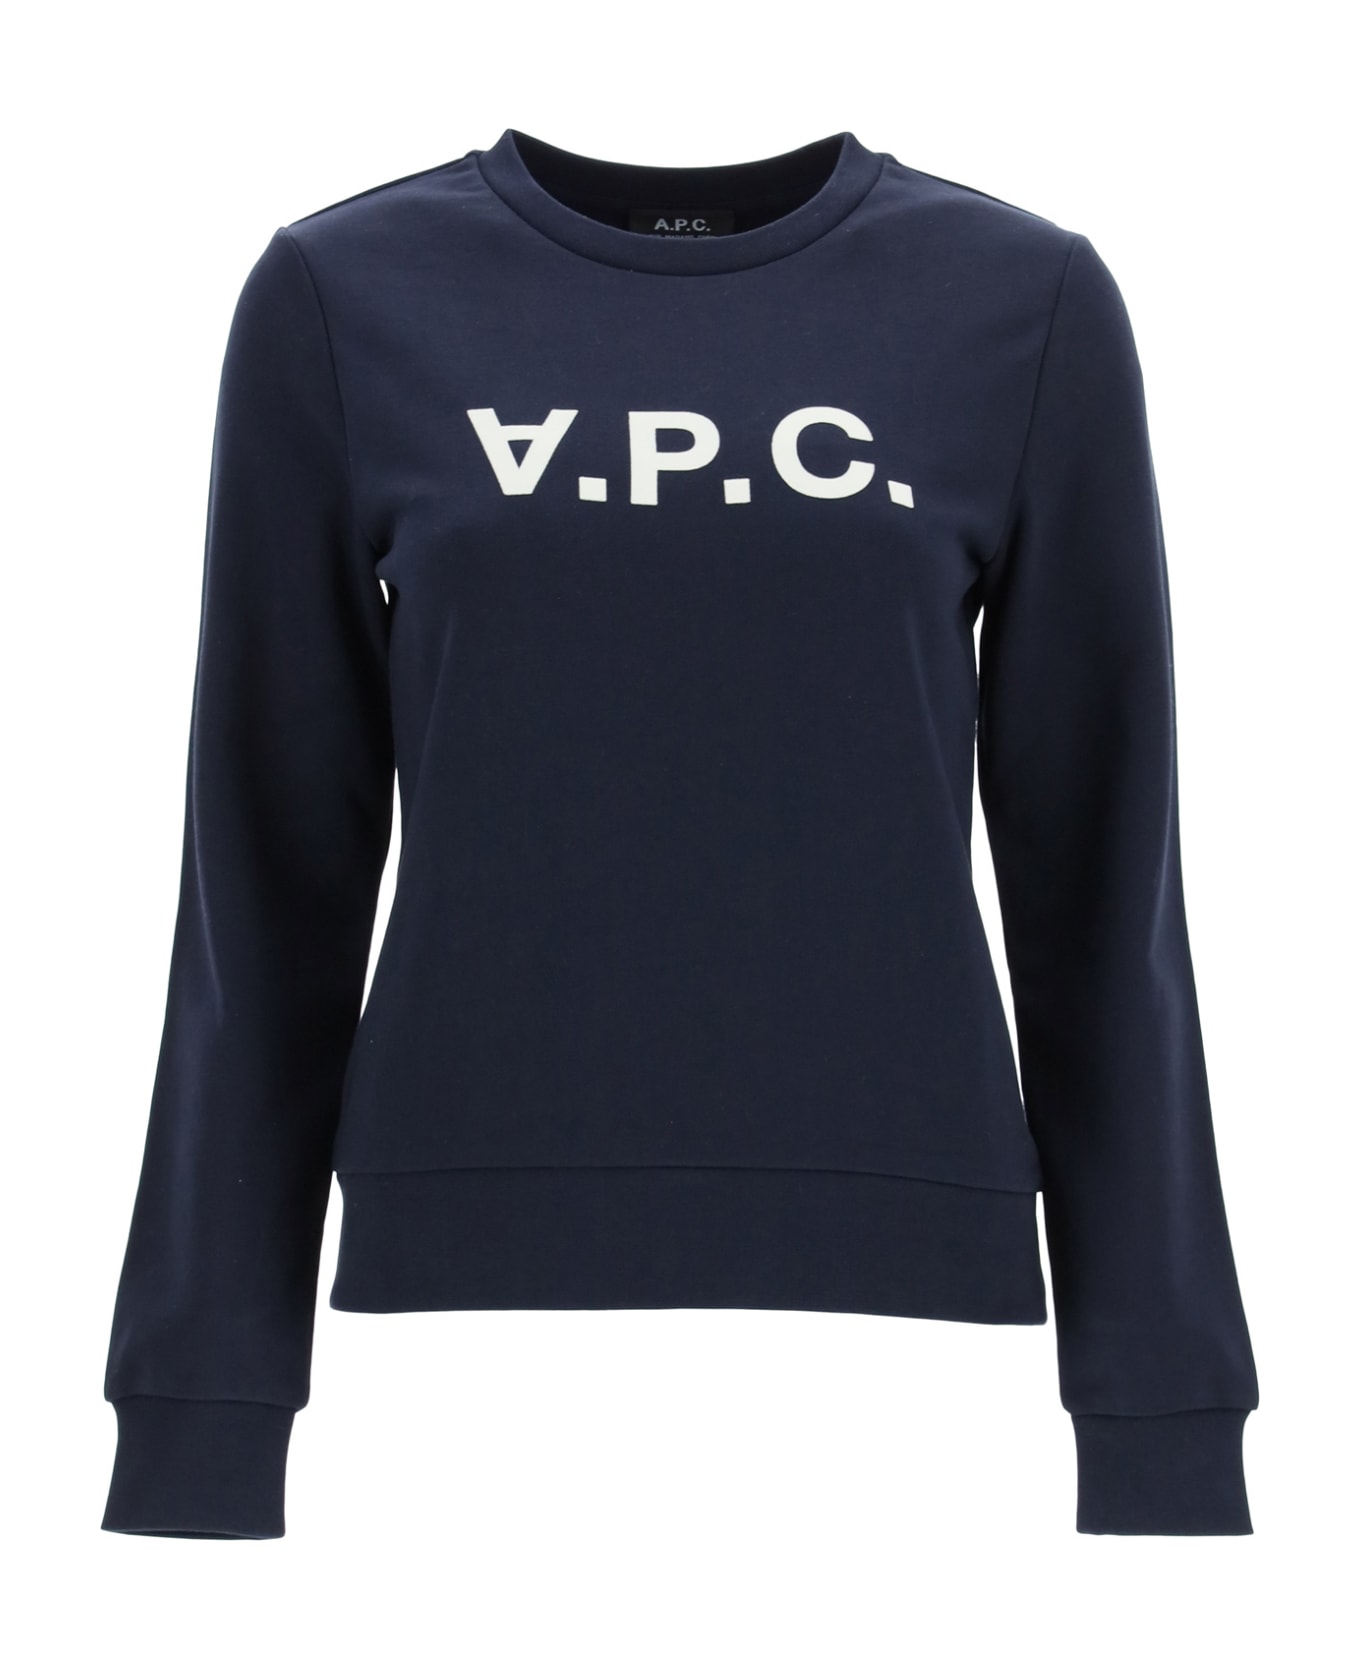 A.P.C. Viva Logo Sweatshirt - Blue